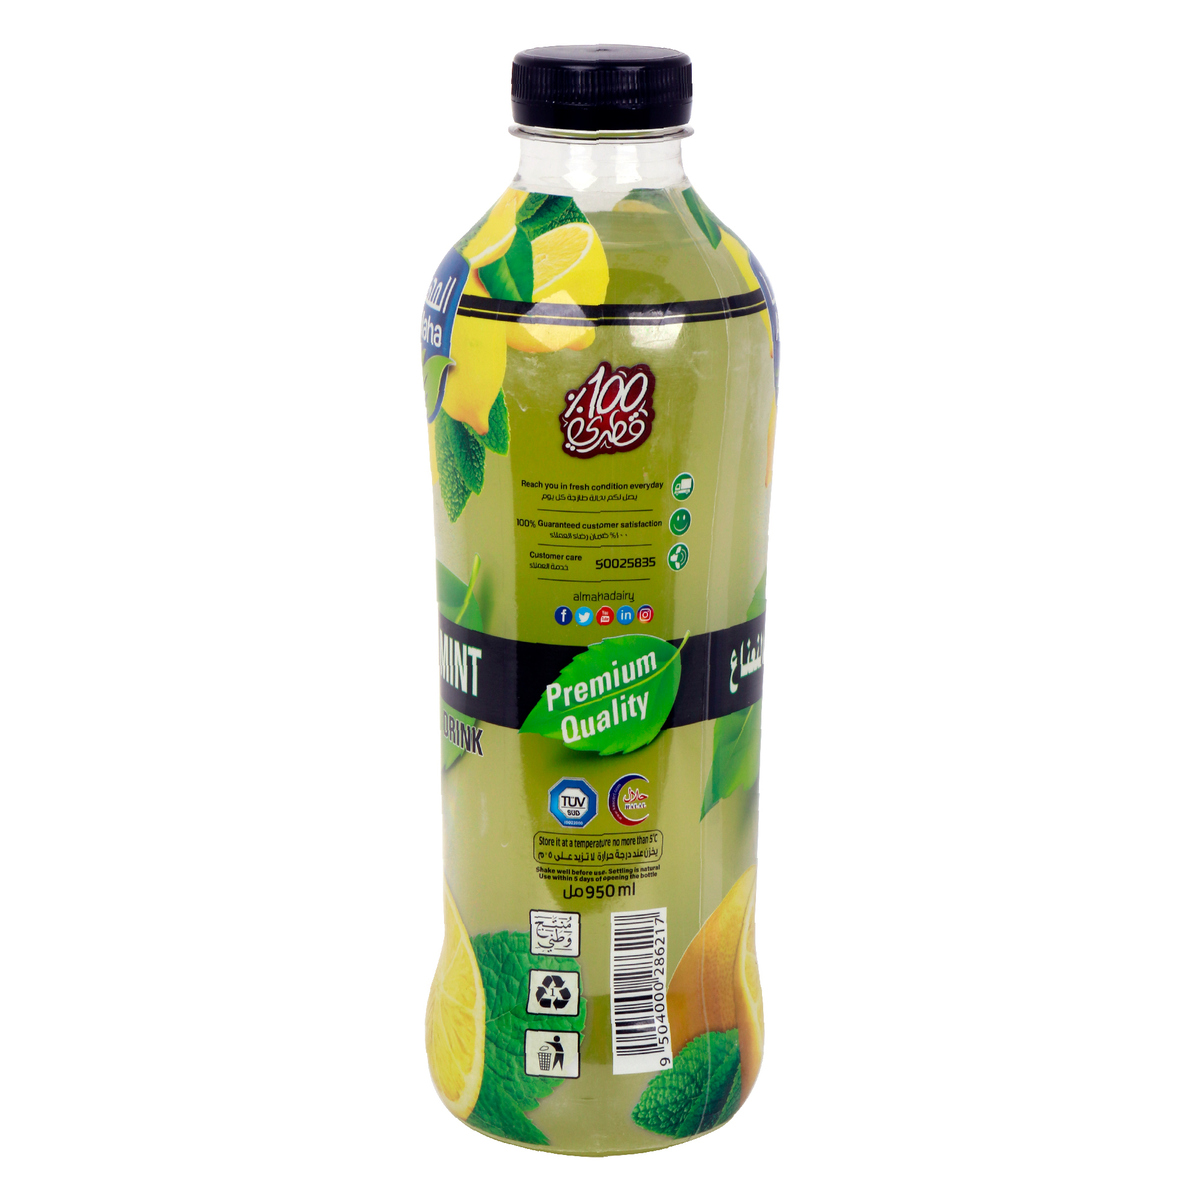 Al Maha Lemon Mint Drink 950ml